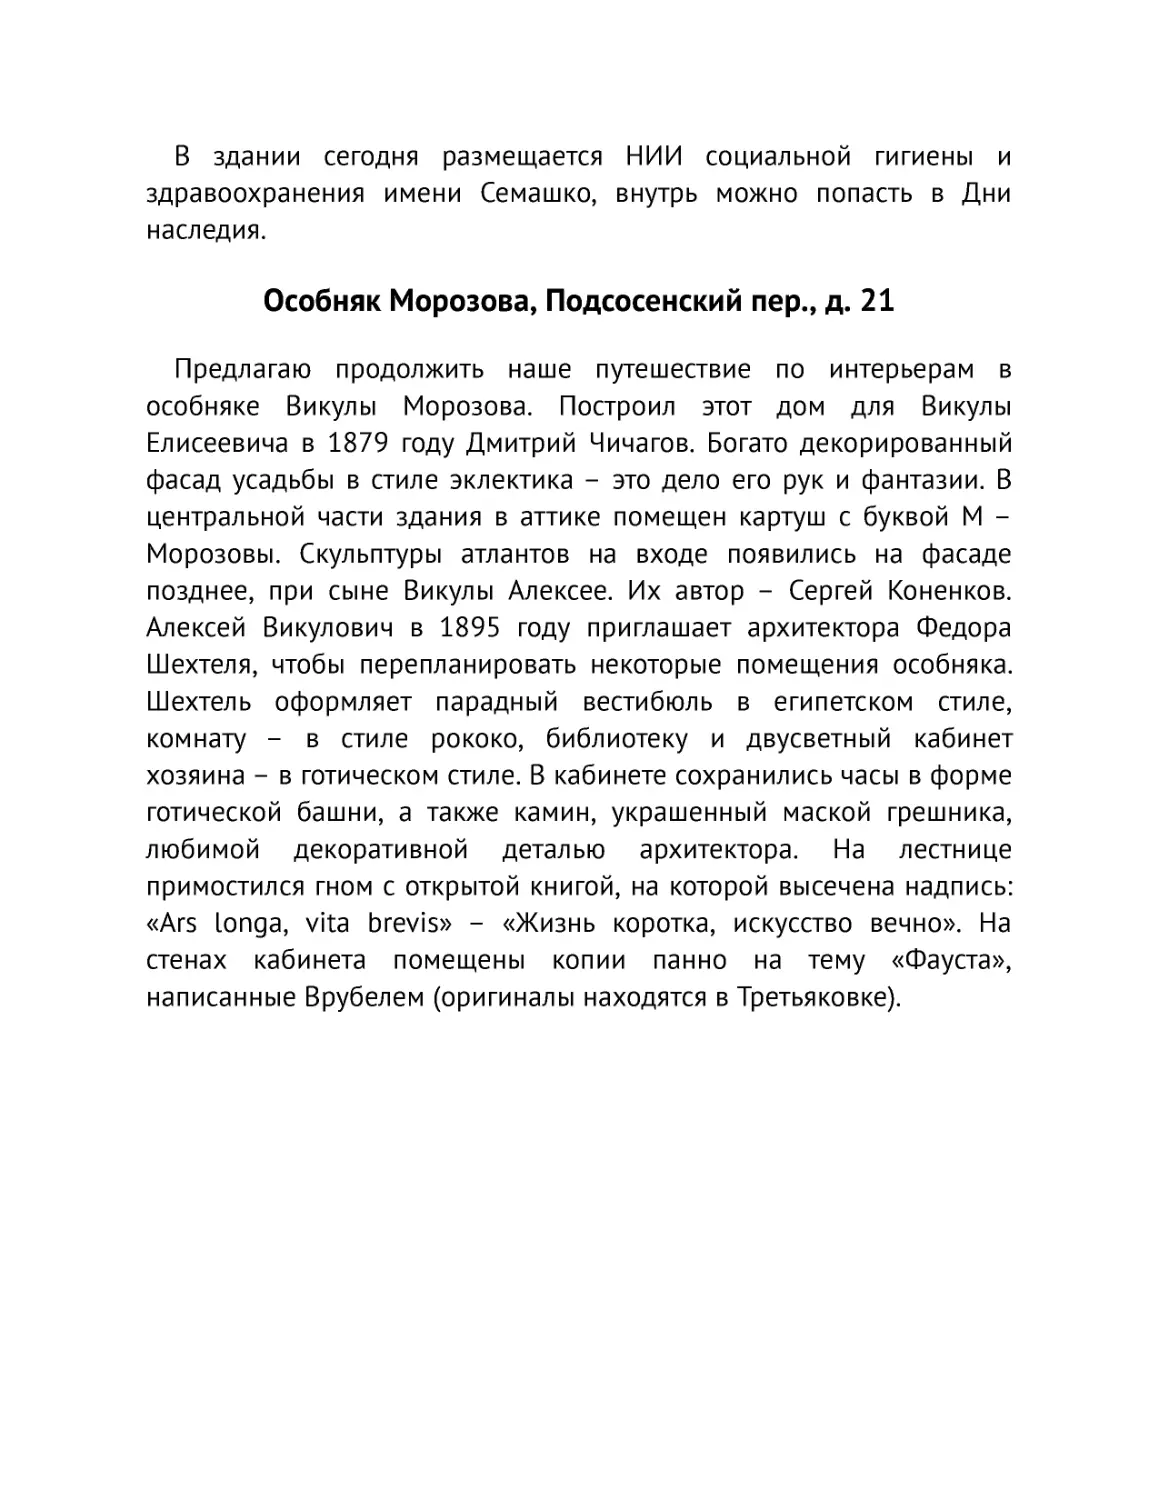 ﻿Особняк Морозова, Подсосенский пер., д. 2